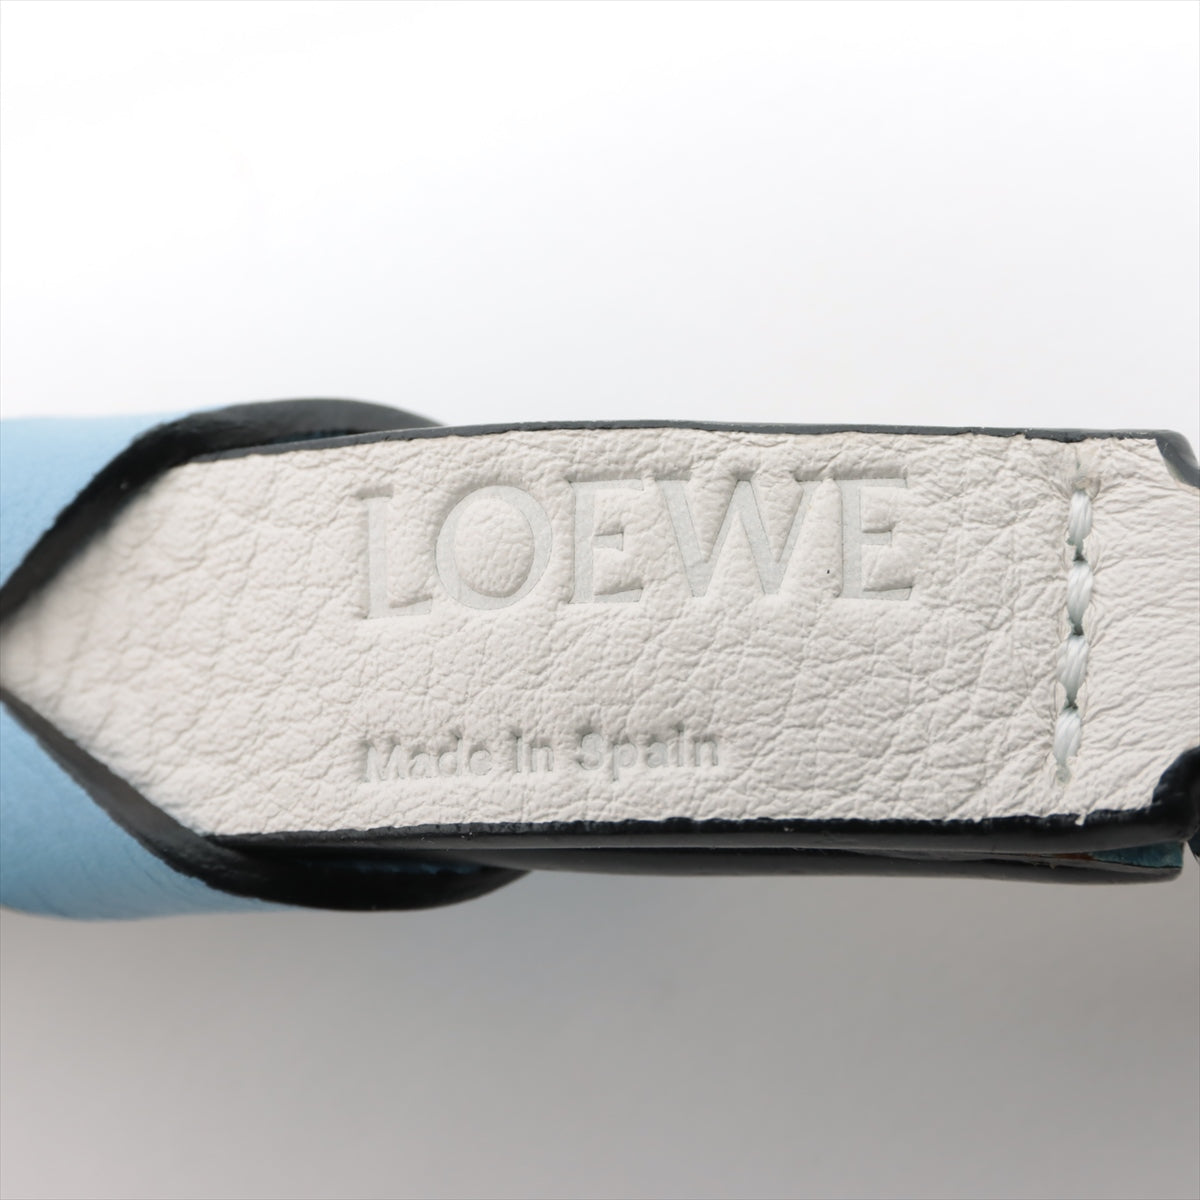 Loewe Shoulder strap Leather Blue x white